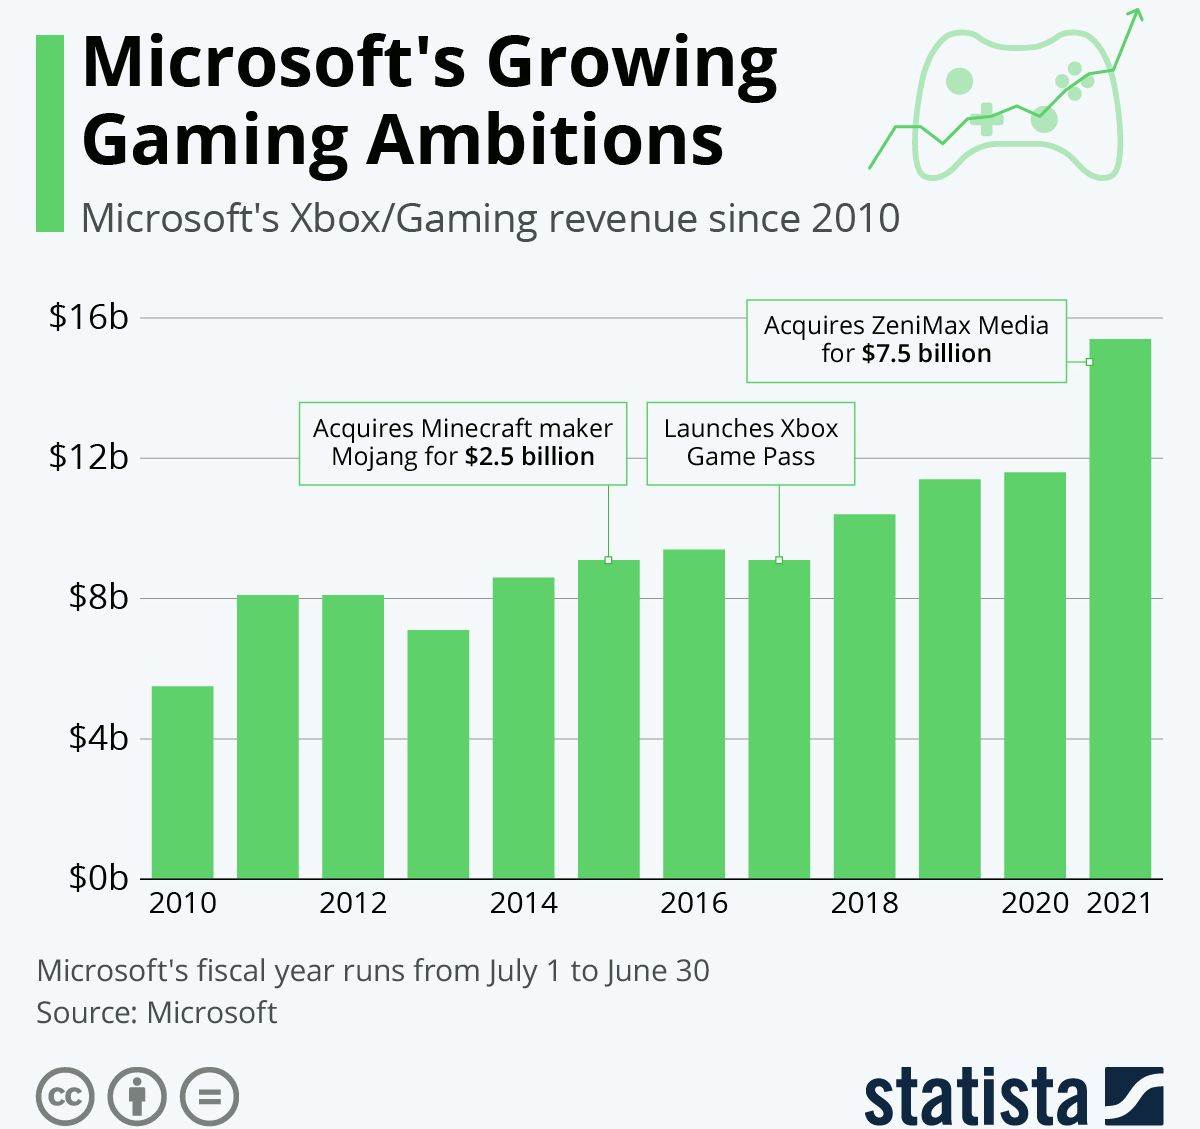  Microsoft gaming Statista.jpg 